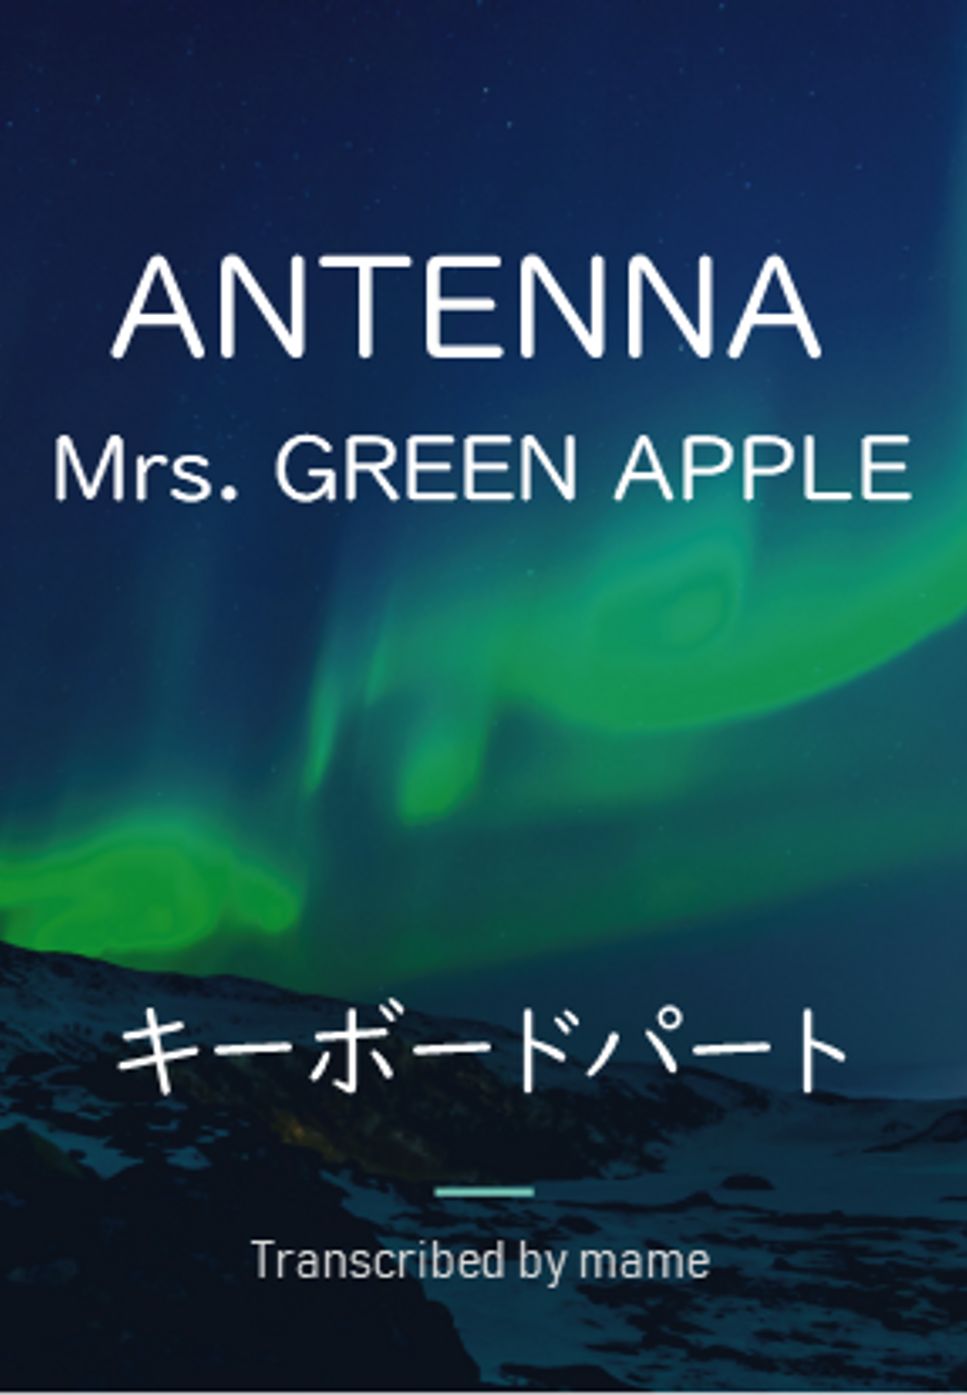 Mrs. GREEN APPLE - ANTENNA (ピアノパート) by mame